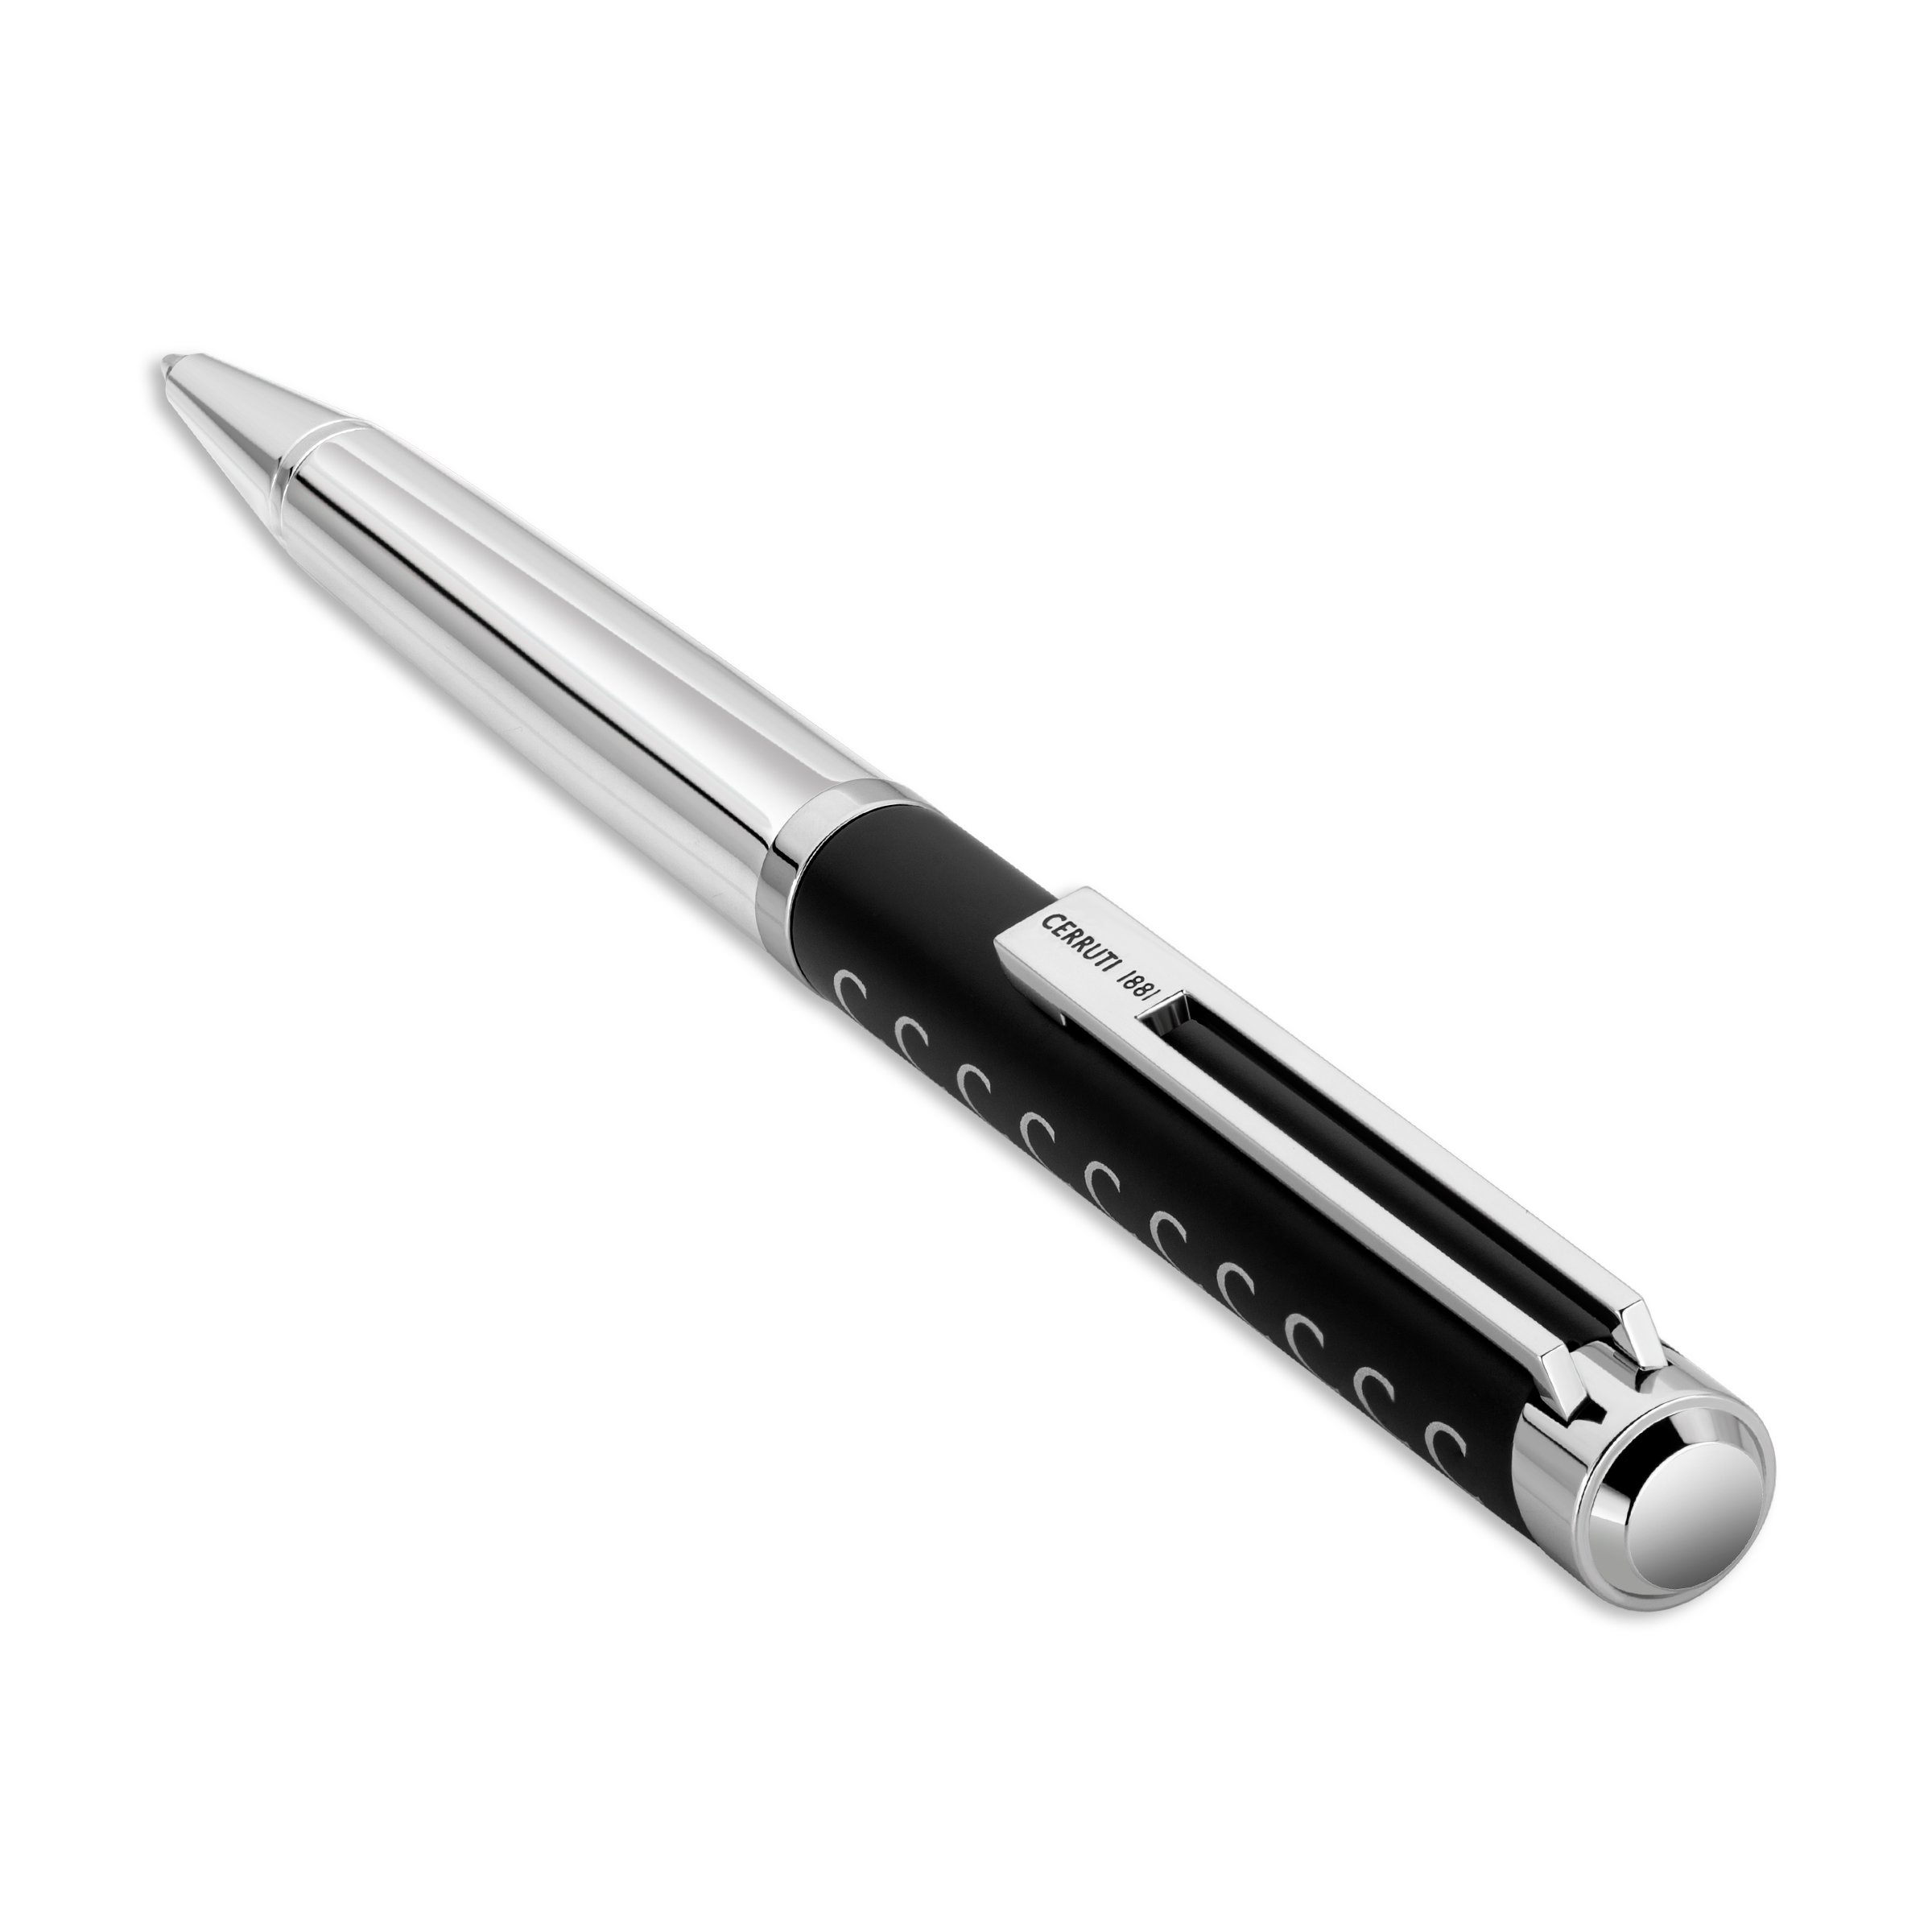 Cerruti1881 Ballpoint Pen Silver & Black - NSS221102A 2